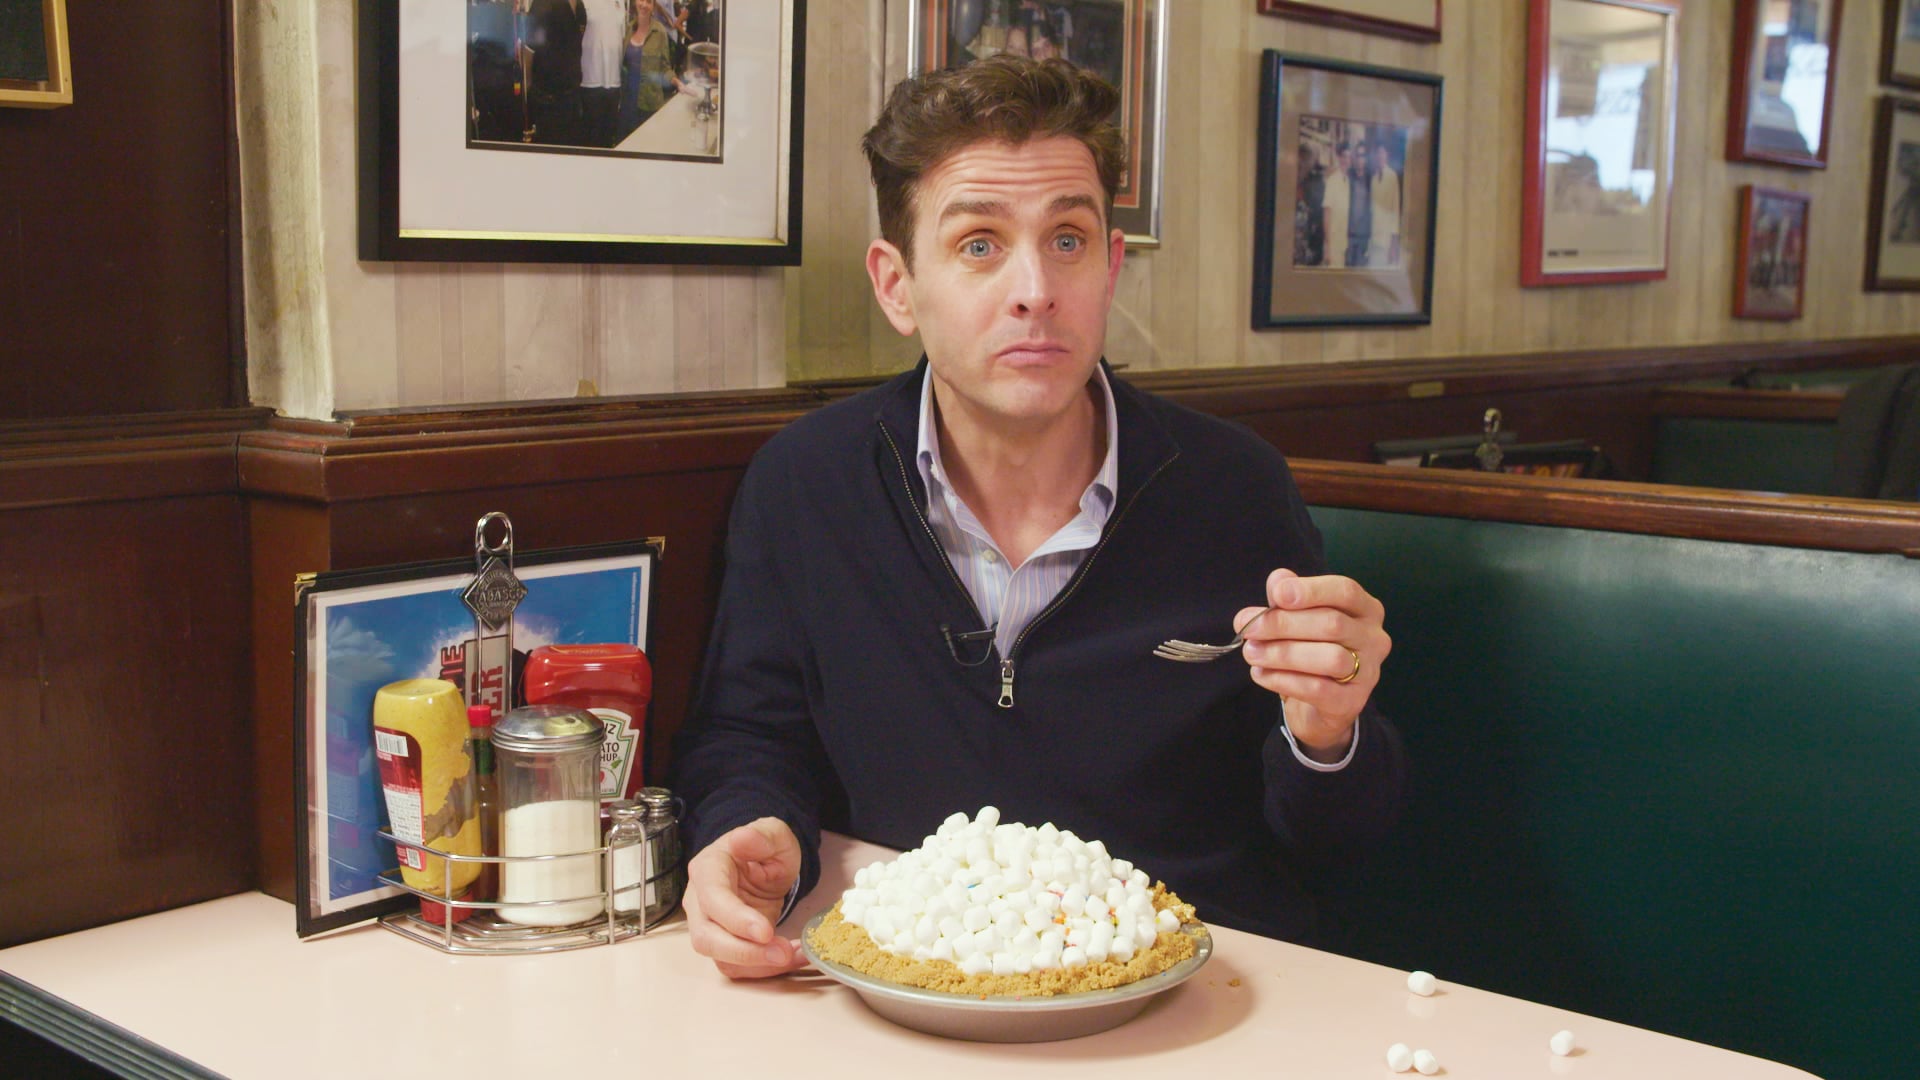 Waitress | Joey Fatone Social Drop Eating Pie